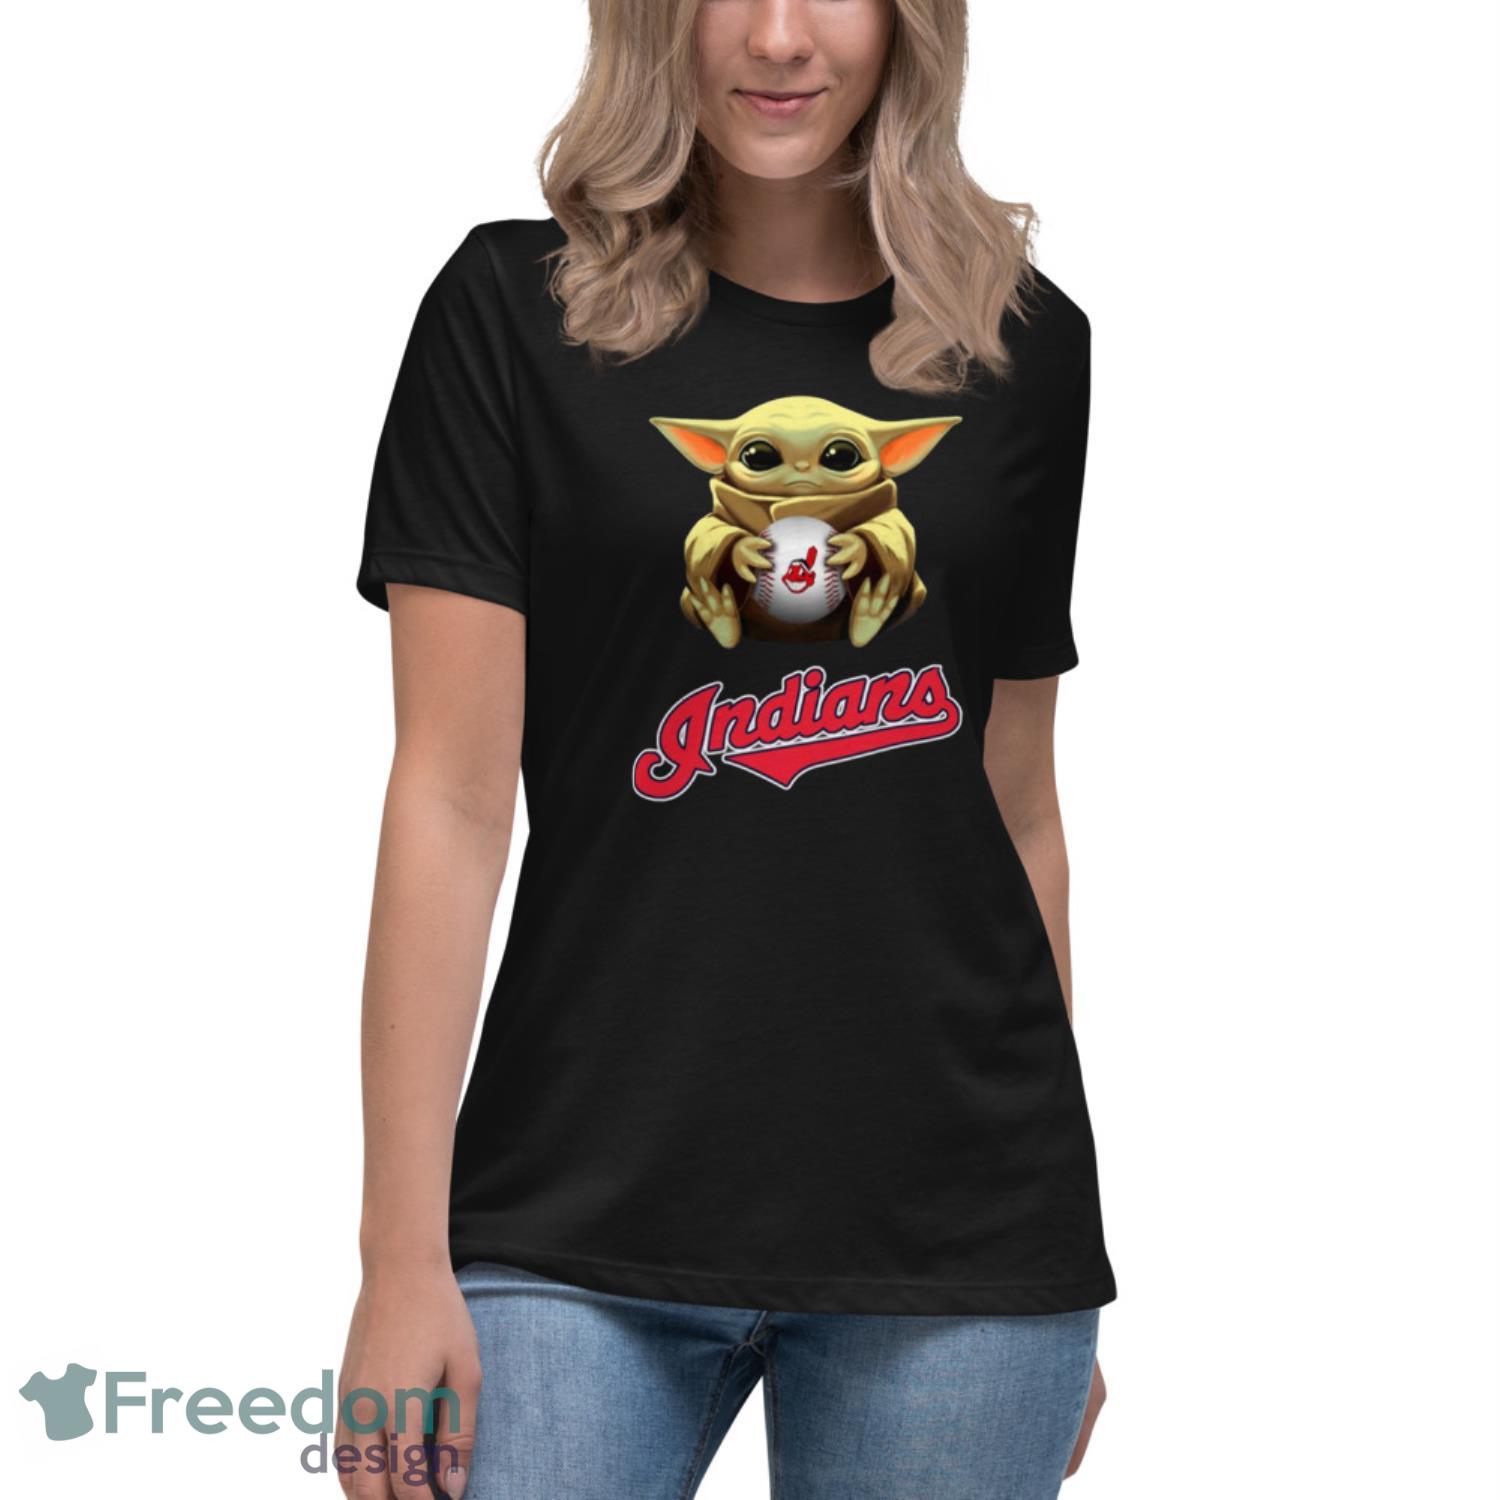 Shirts & Tops, Cleveland Indians Baseball